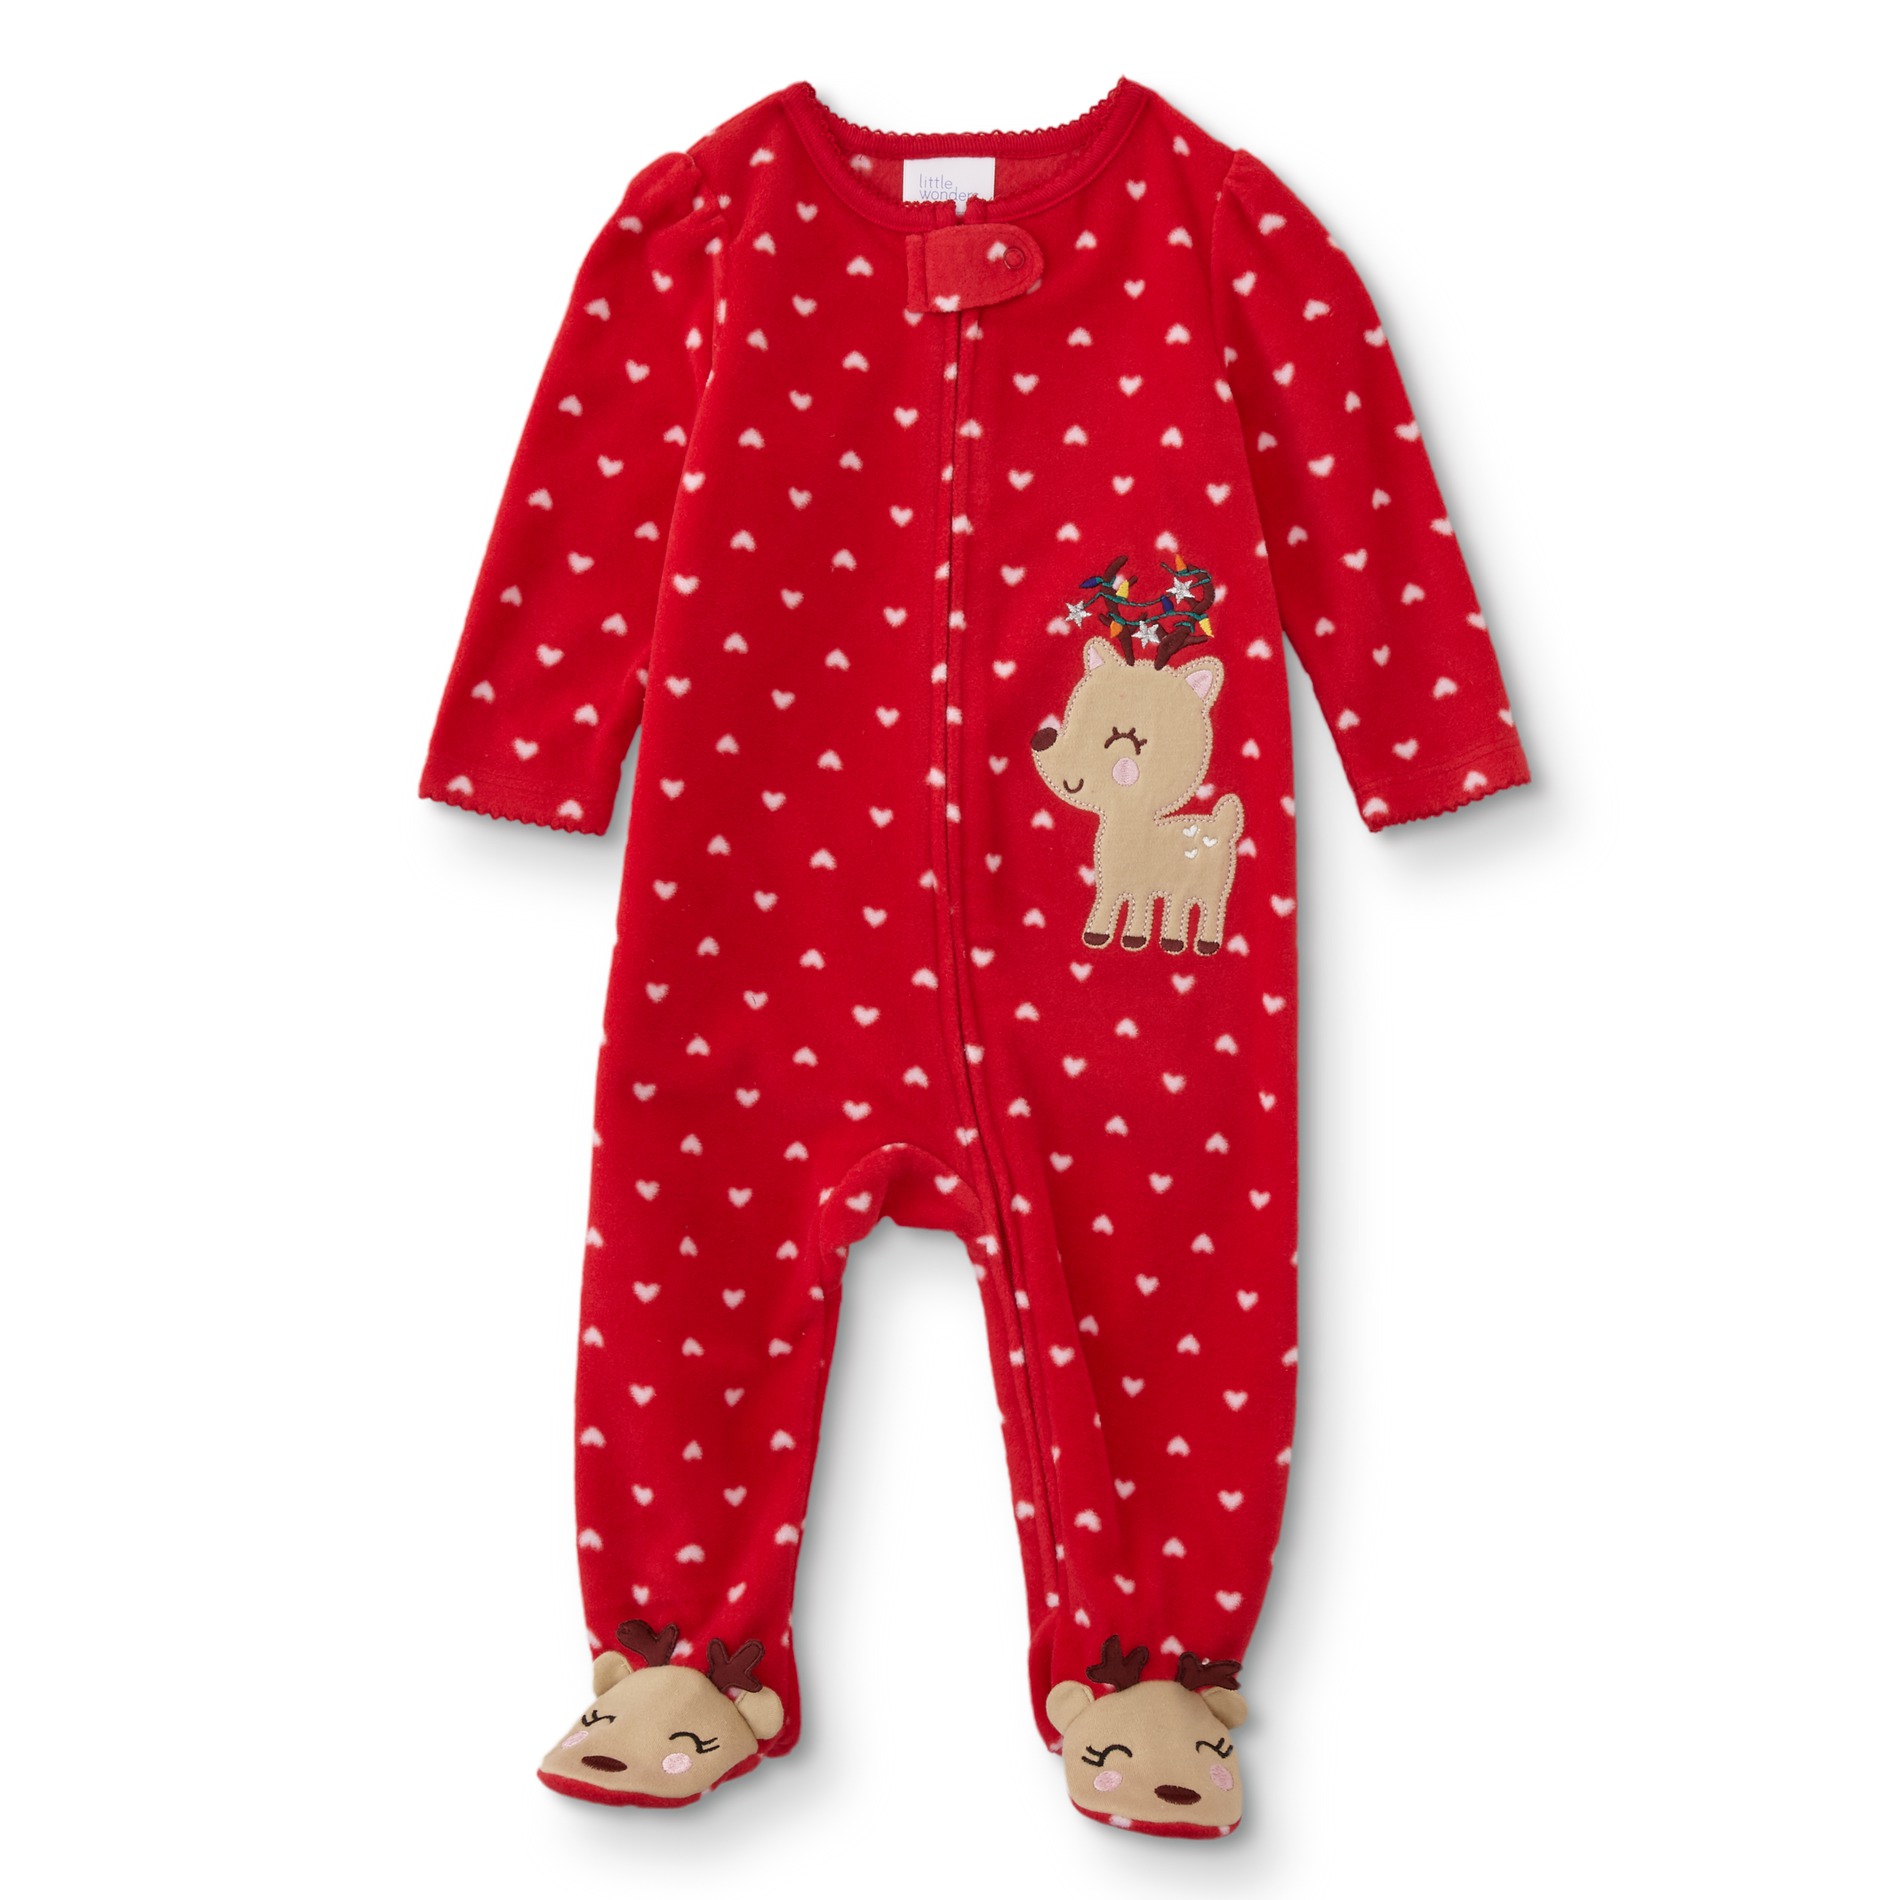 Little Wonders Infants' Christmas Sleeper Pajamas - Reindeer/Hearts